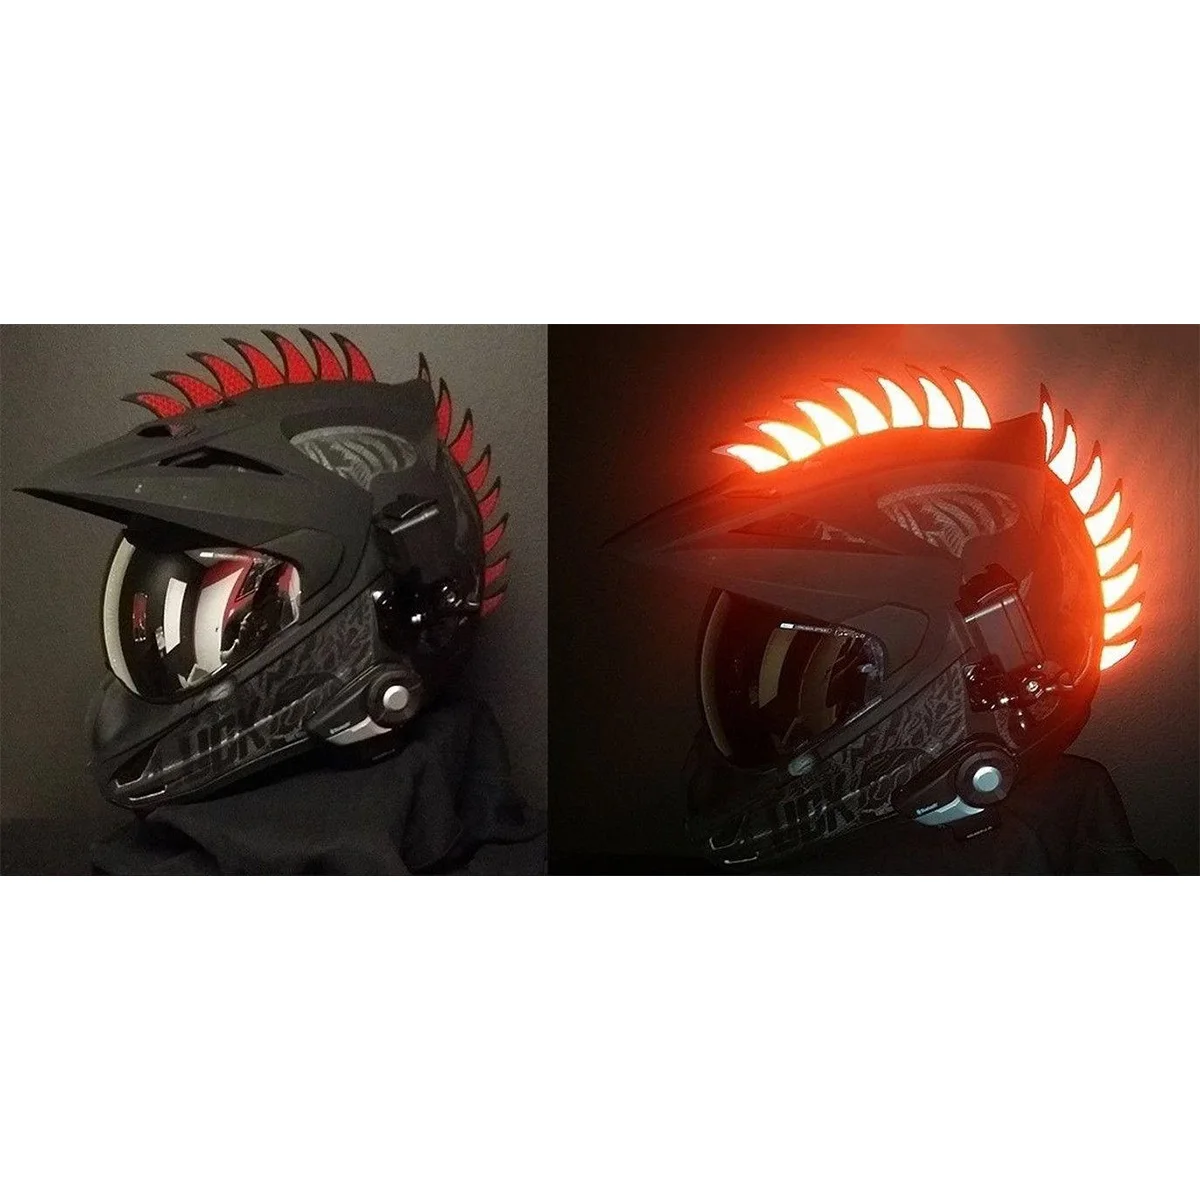 

27Pcs/Strip New Reflective Decals Sticker for Rubber Helmet Mohawk Warhawk Spikes Motorcycle Decals 2.1x3.4 cm